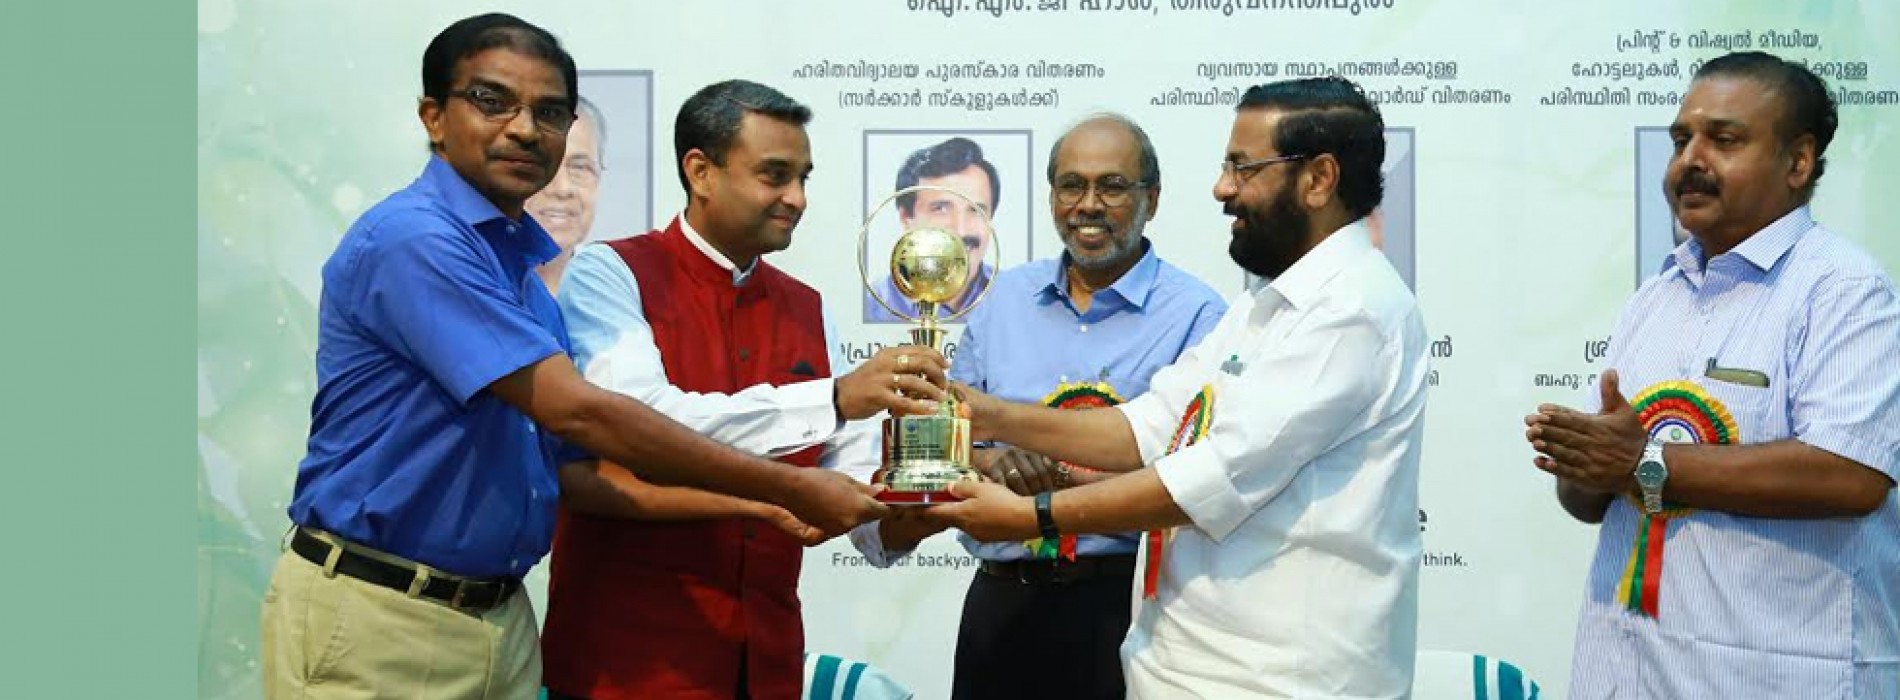 Vasundhara Sarovar Premiere, Vayalar awarded first spot in the Kerala State Pollution Control Board Annual Awards 2017